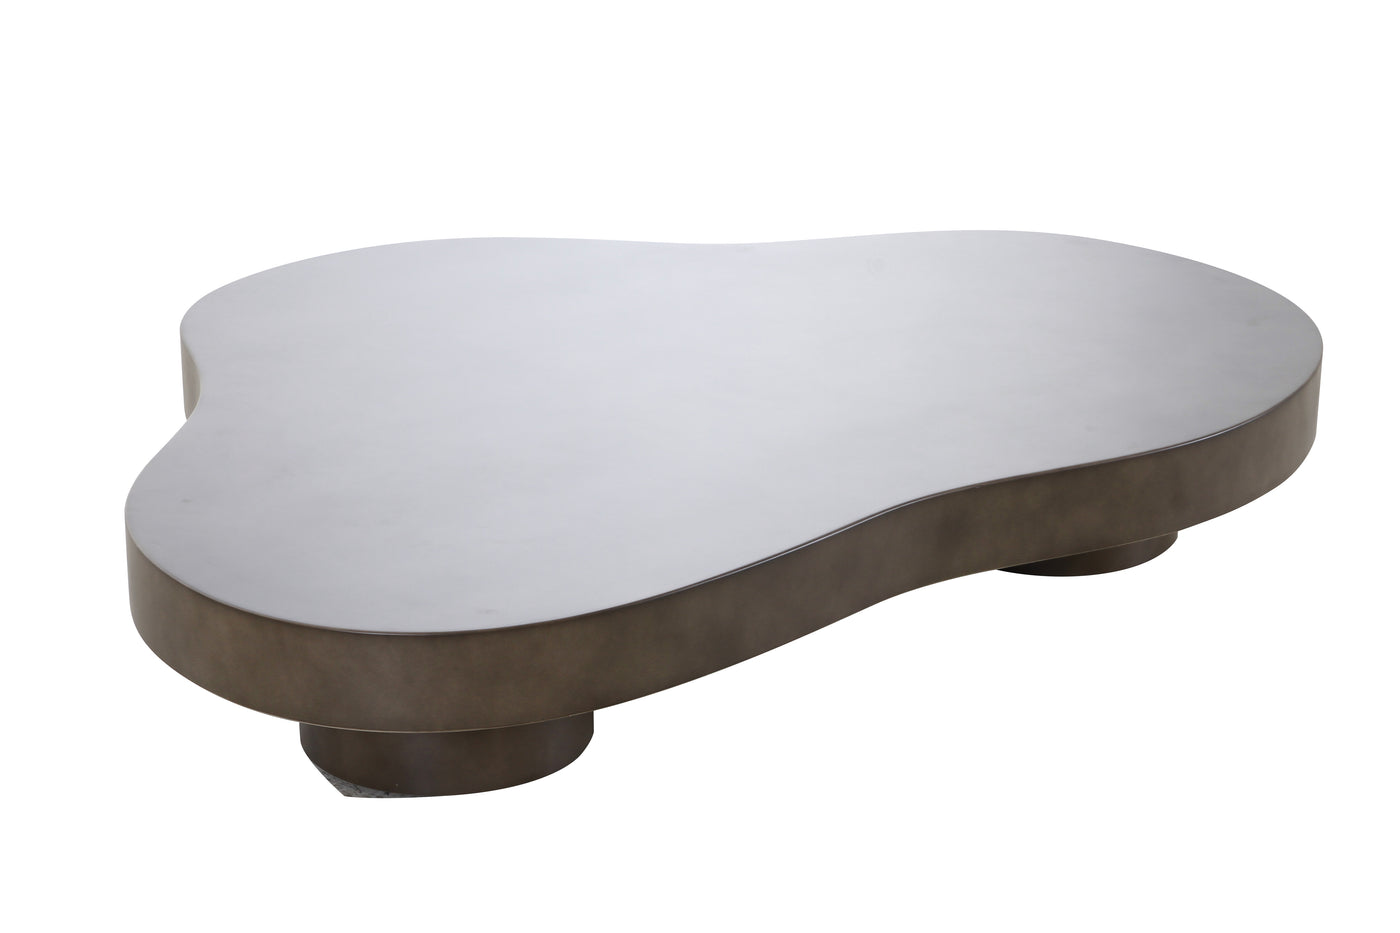 Portia Coffee Table - Future Classics Furniture